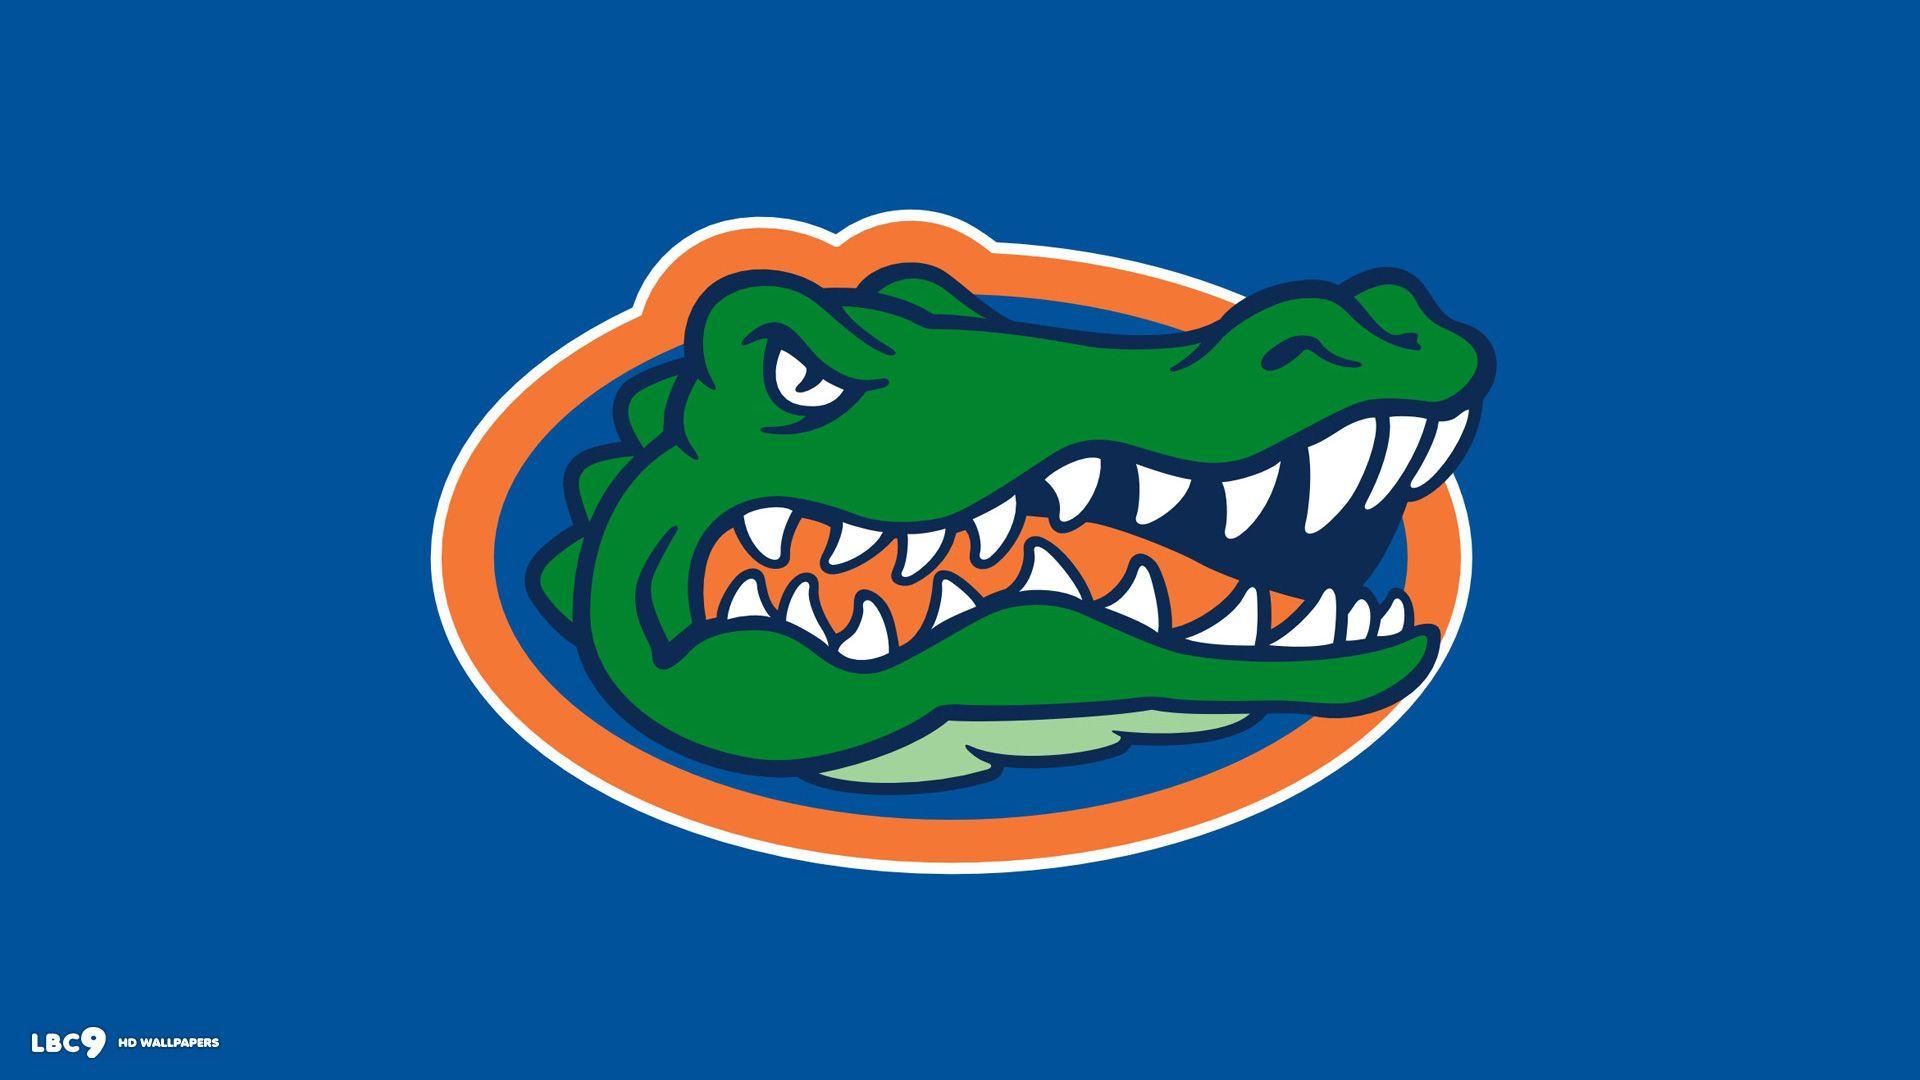 FL Gators Logo - Florida Gators Backgrounds | PixelsTalk.Net